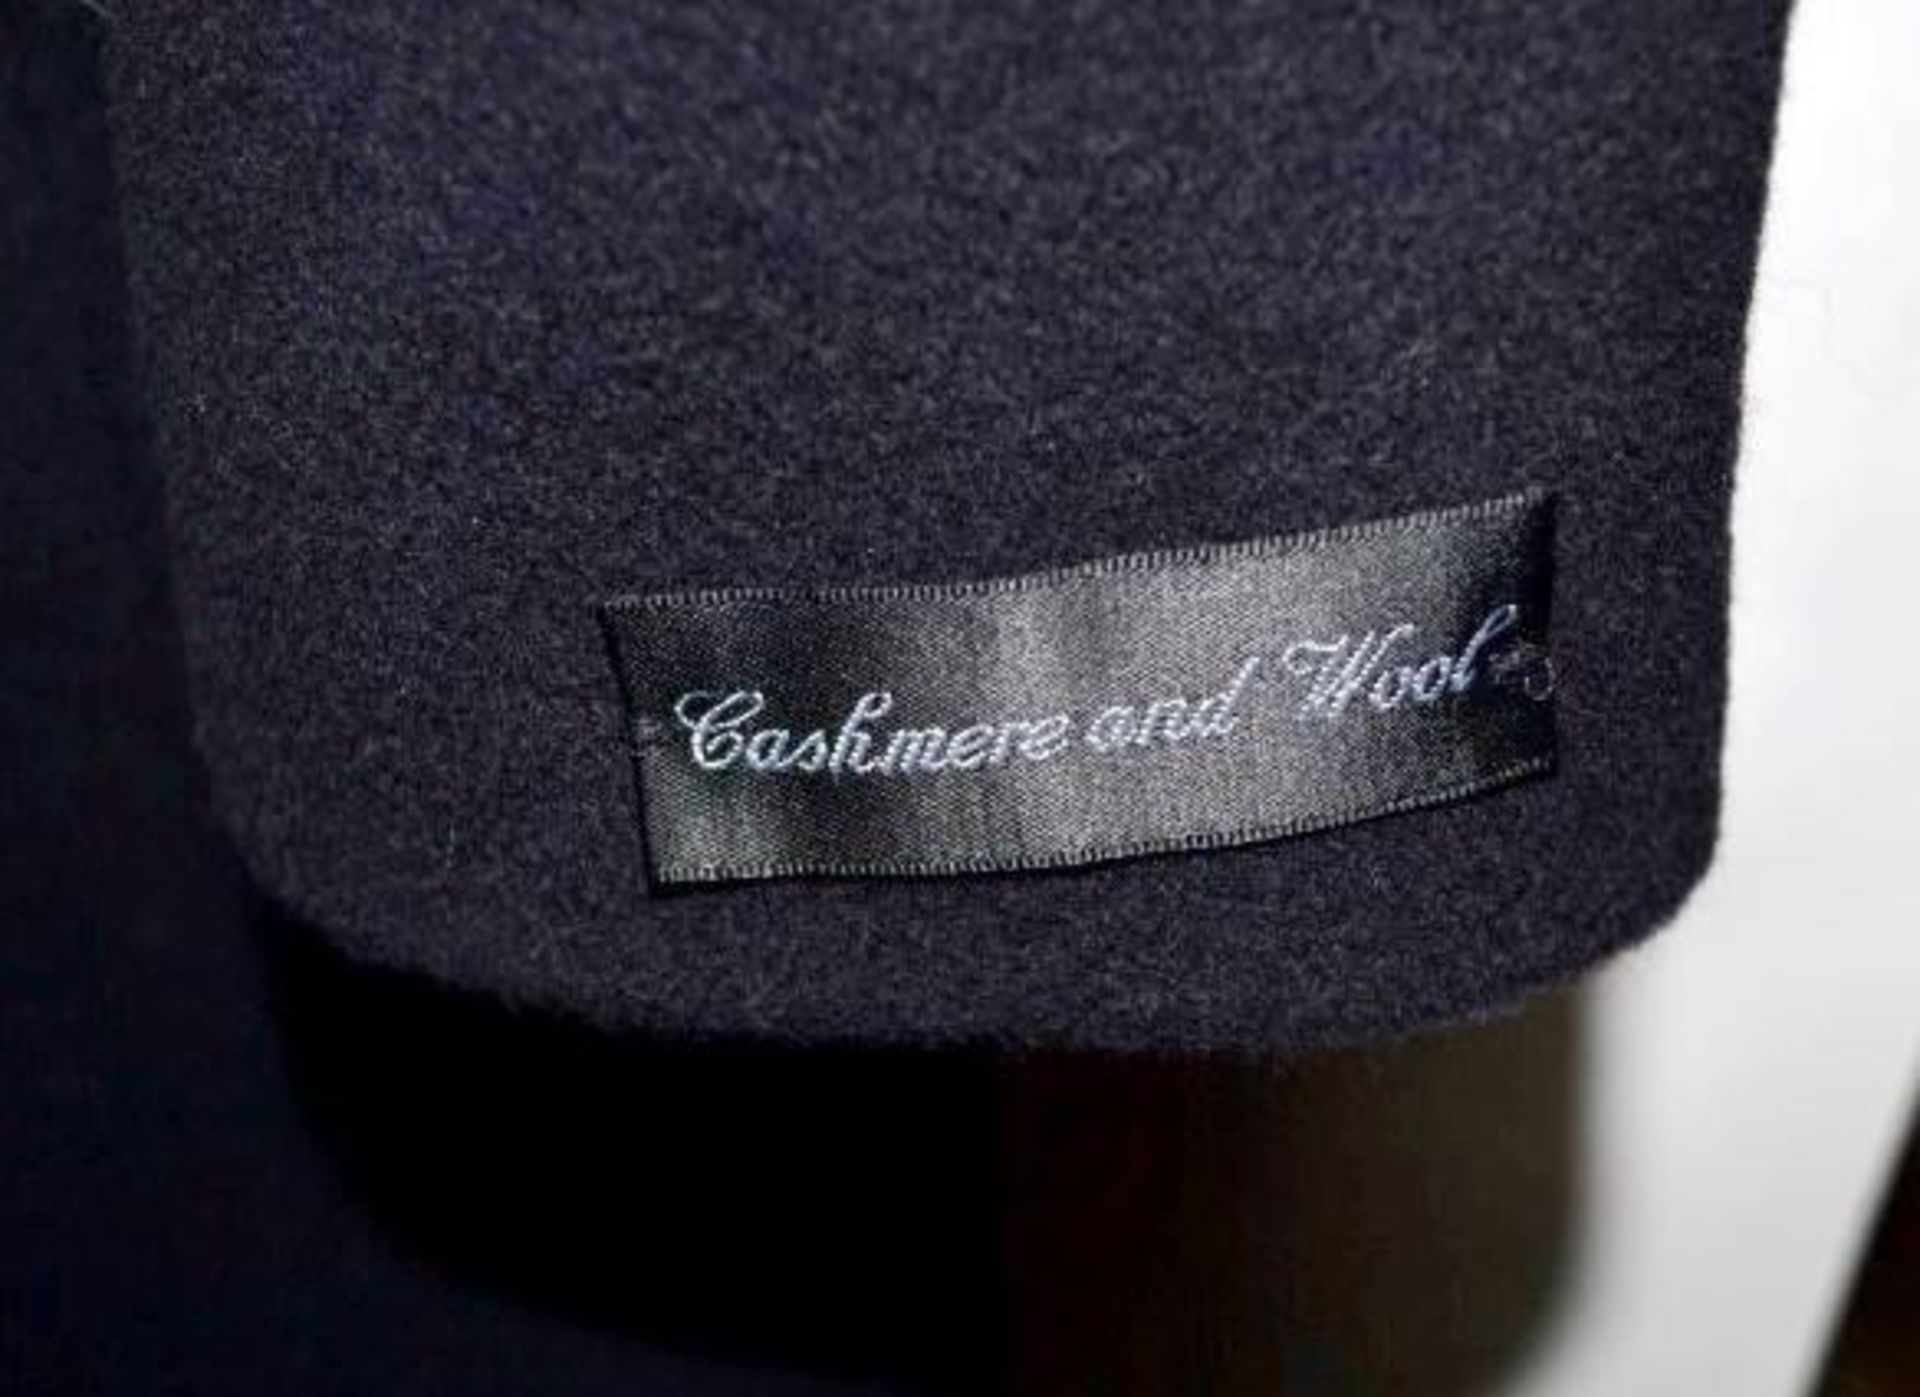 1 x Steilmann Premium 'Wool + Cashmere' Winter Coat - Dark Navy, Very Smart With False Pockets To Fr - Image 2 of 4